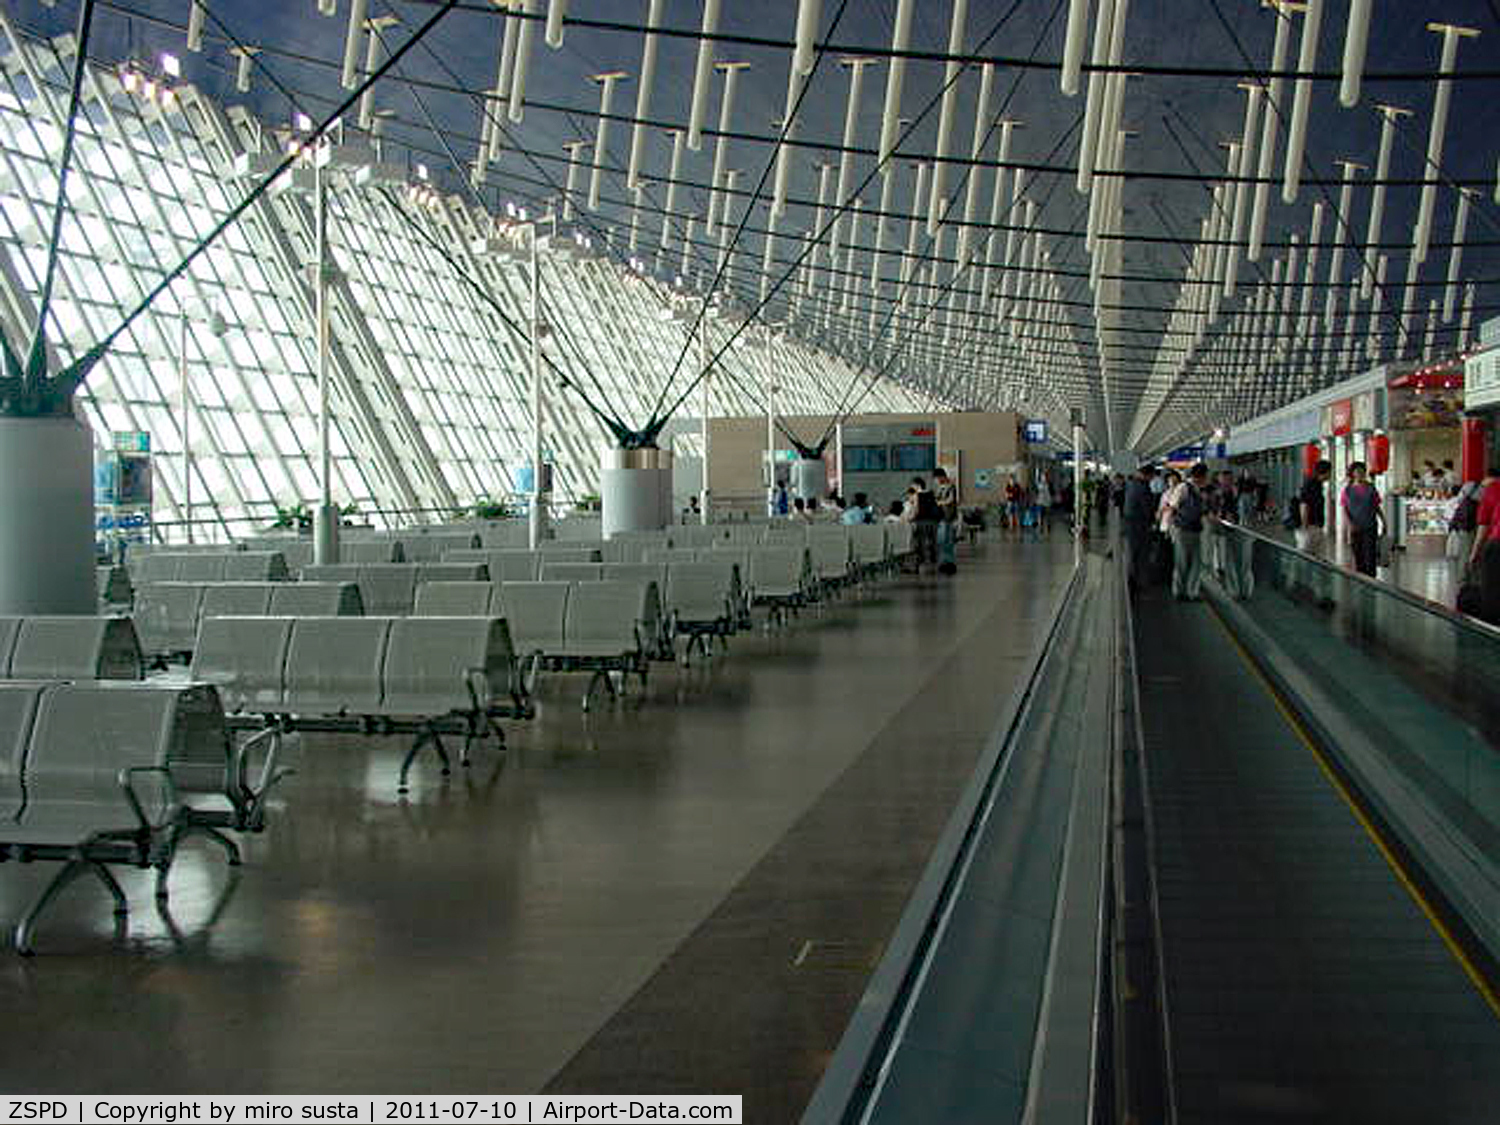 Shanghai Pudong International Airport, Shanghai China (ZSPD) - Shanghai Pudong International Airport, P R China